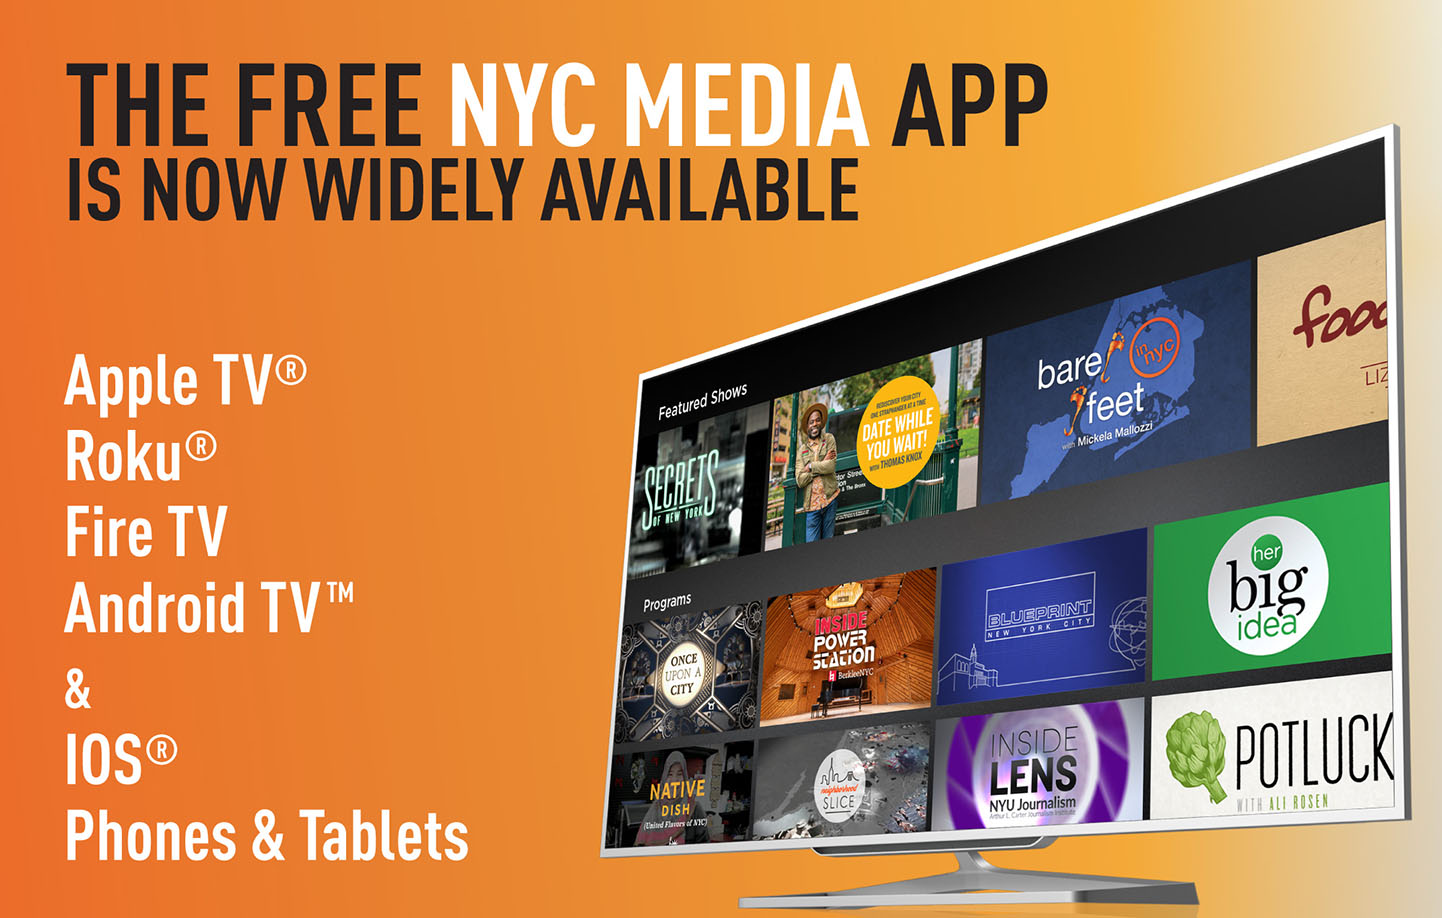 Image of NYC Media app on TV
                                           